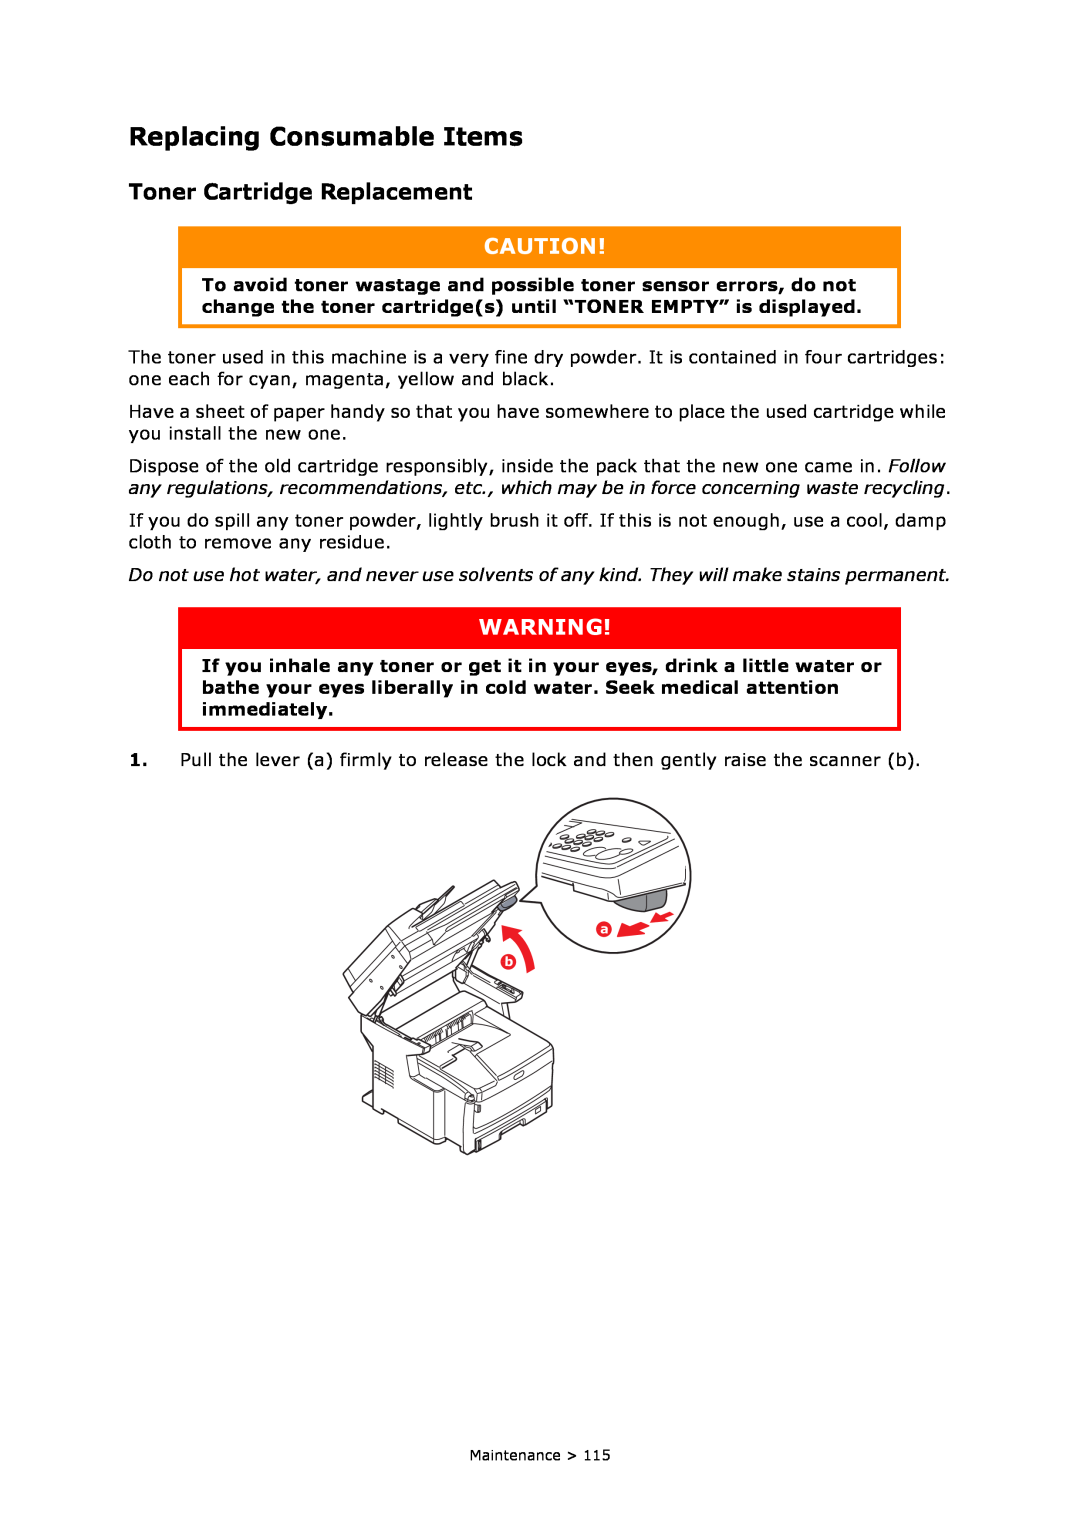 Oki MC860n MFP manual Replacing Consumable Items, Toner Cartridge Replacement 